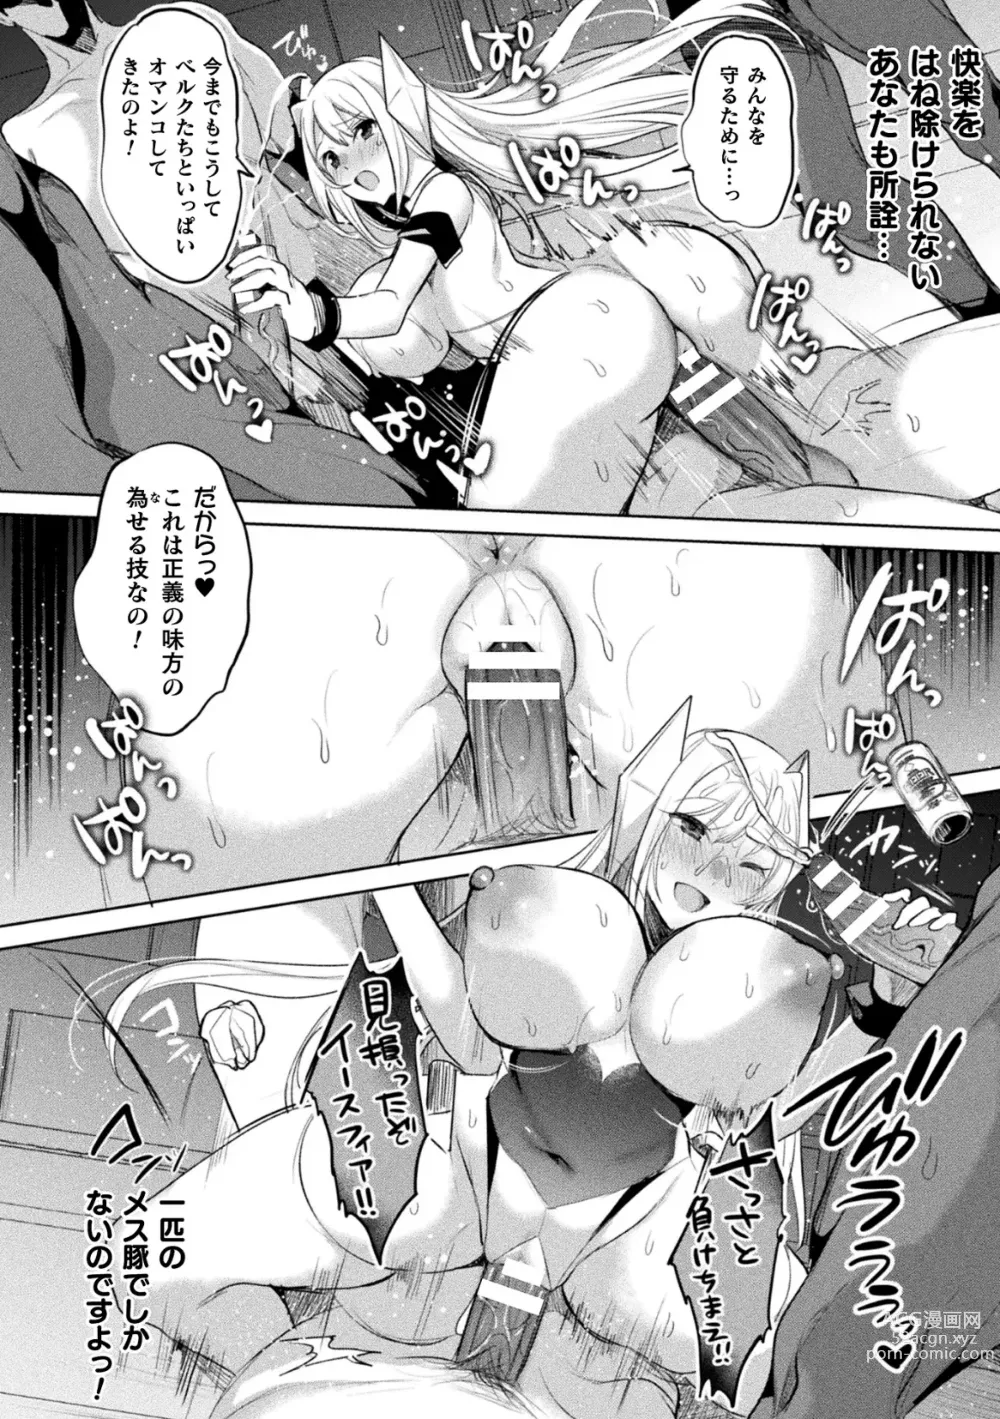 Page 10 of manga Kukkoro Heroines Vol. 35